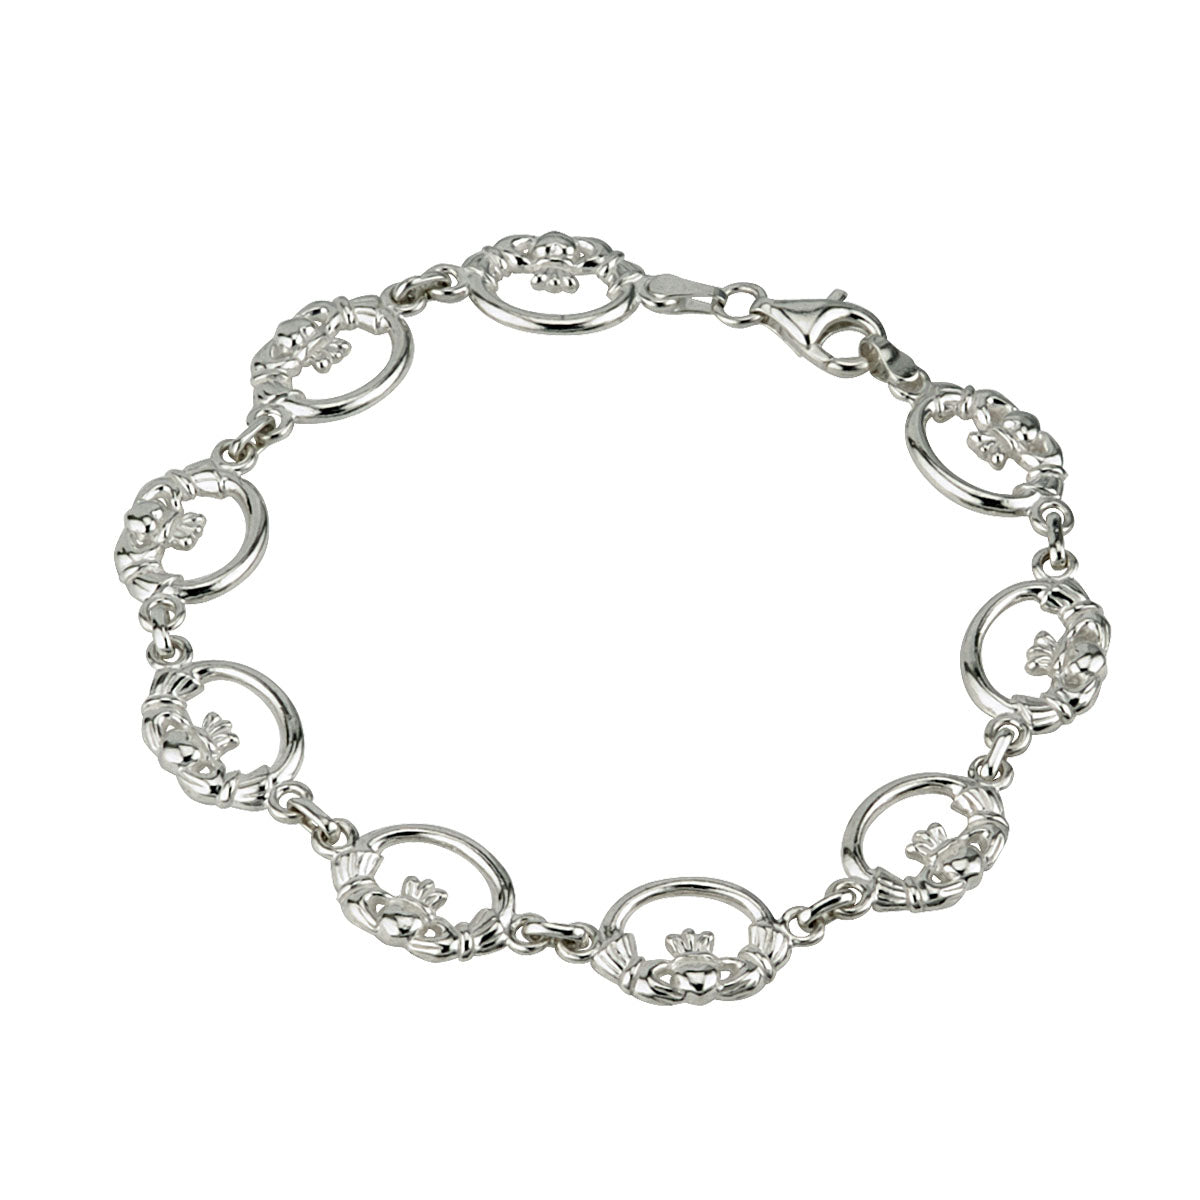 sterling silver claddagh bracelet s5372 from Solvar